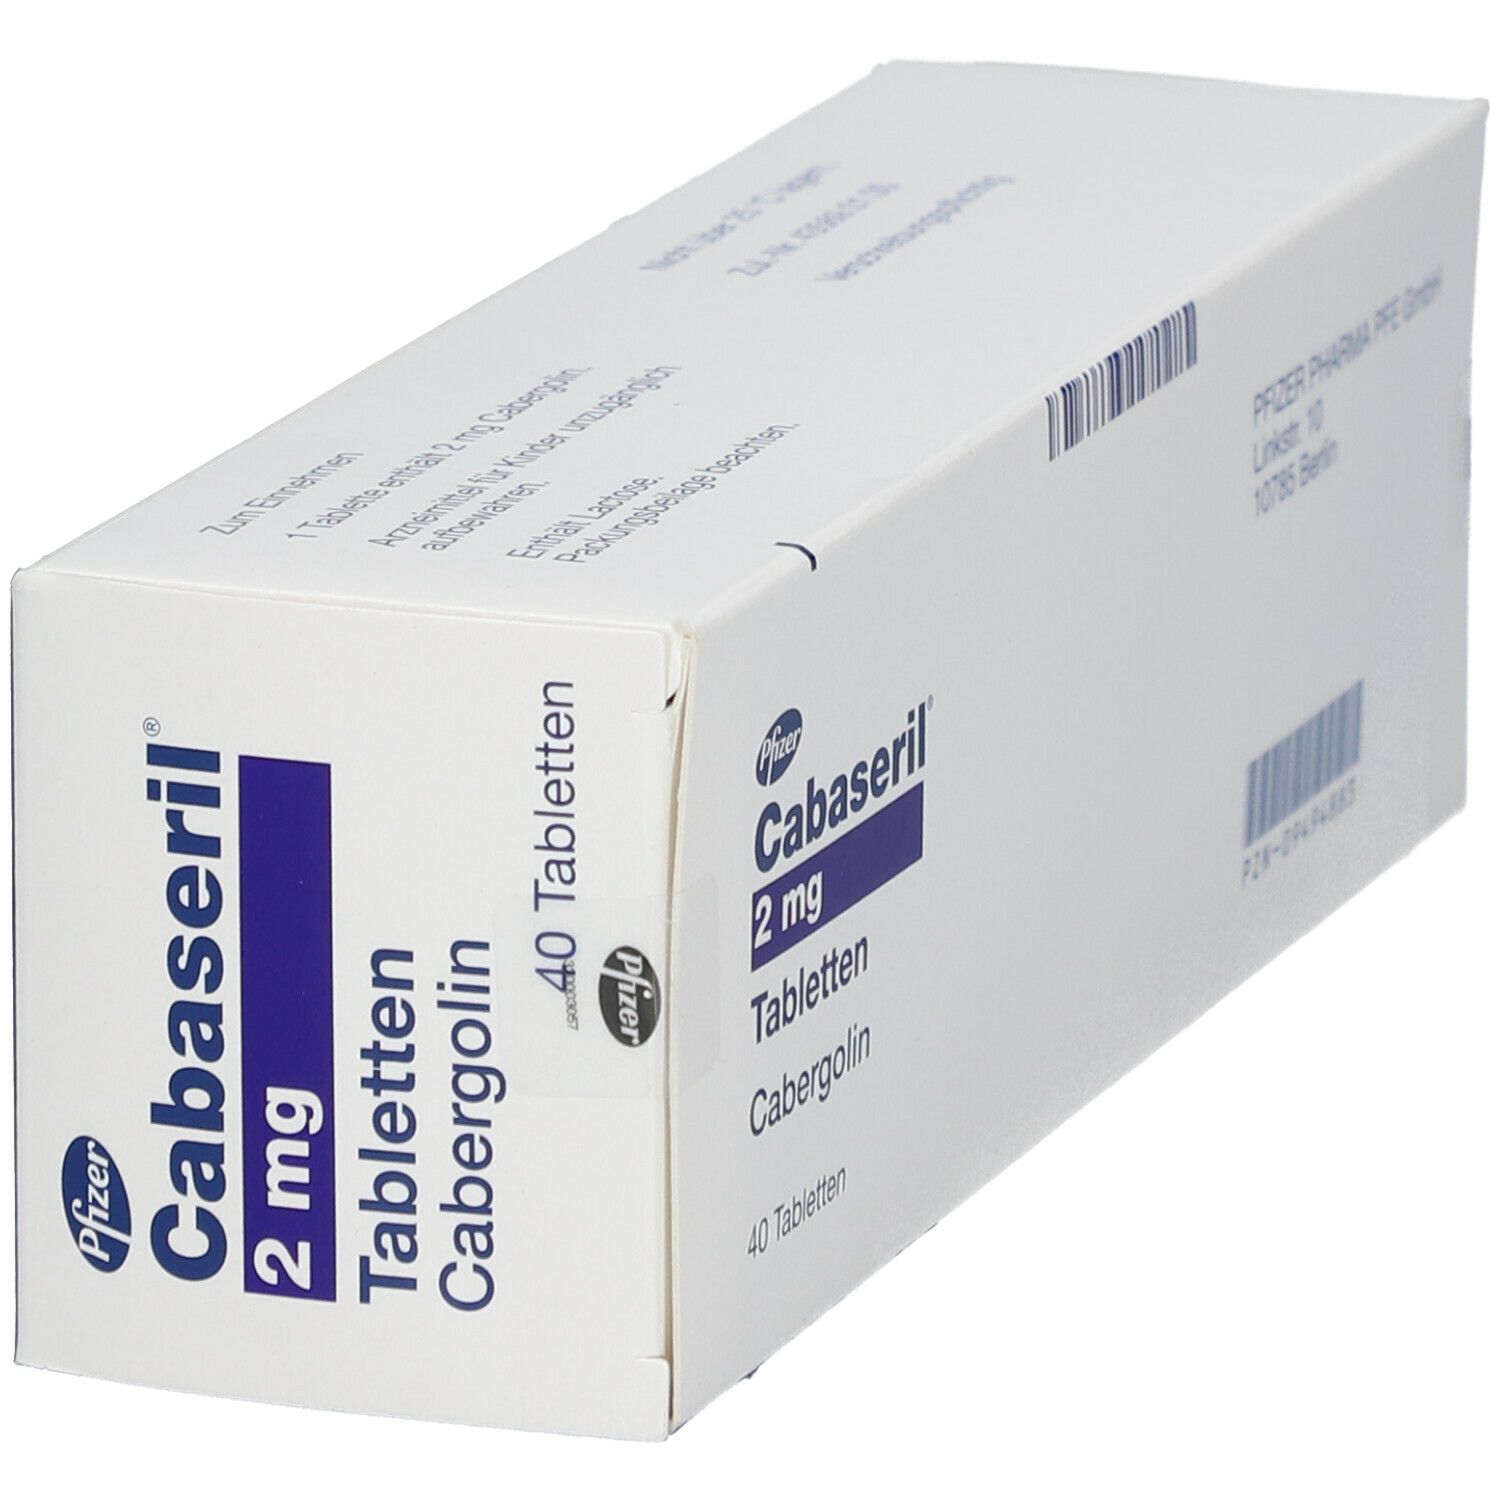 Cabaseril® 2 mg